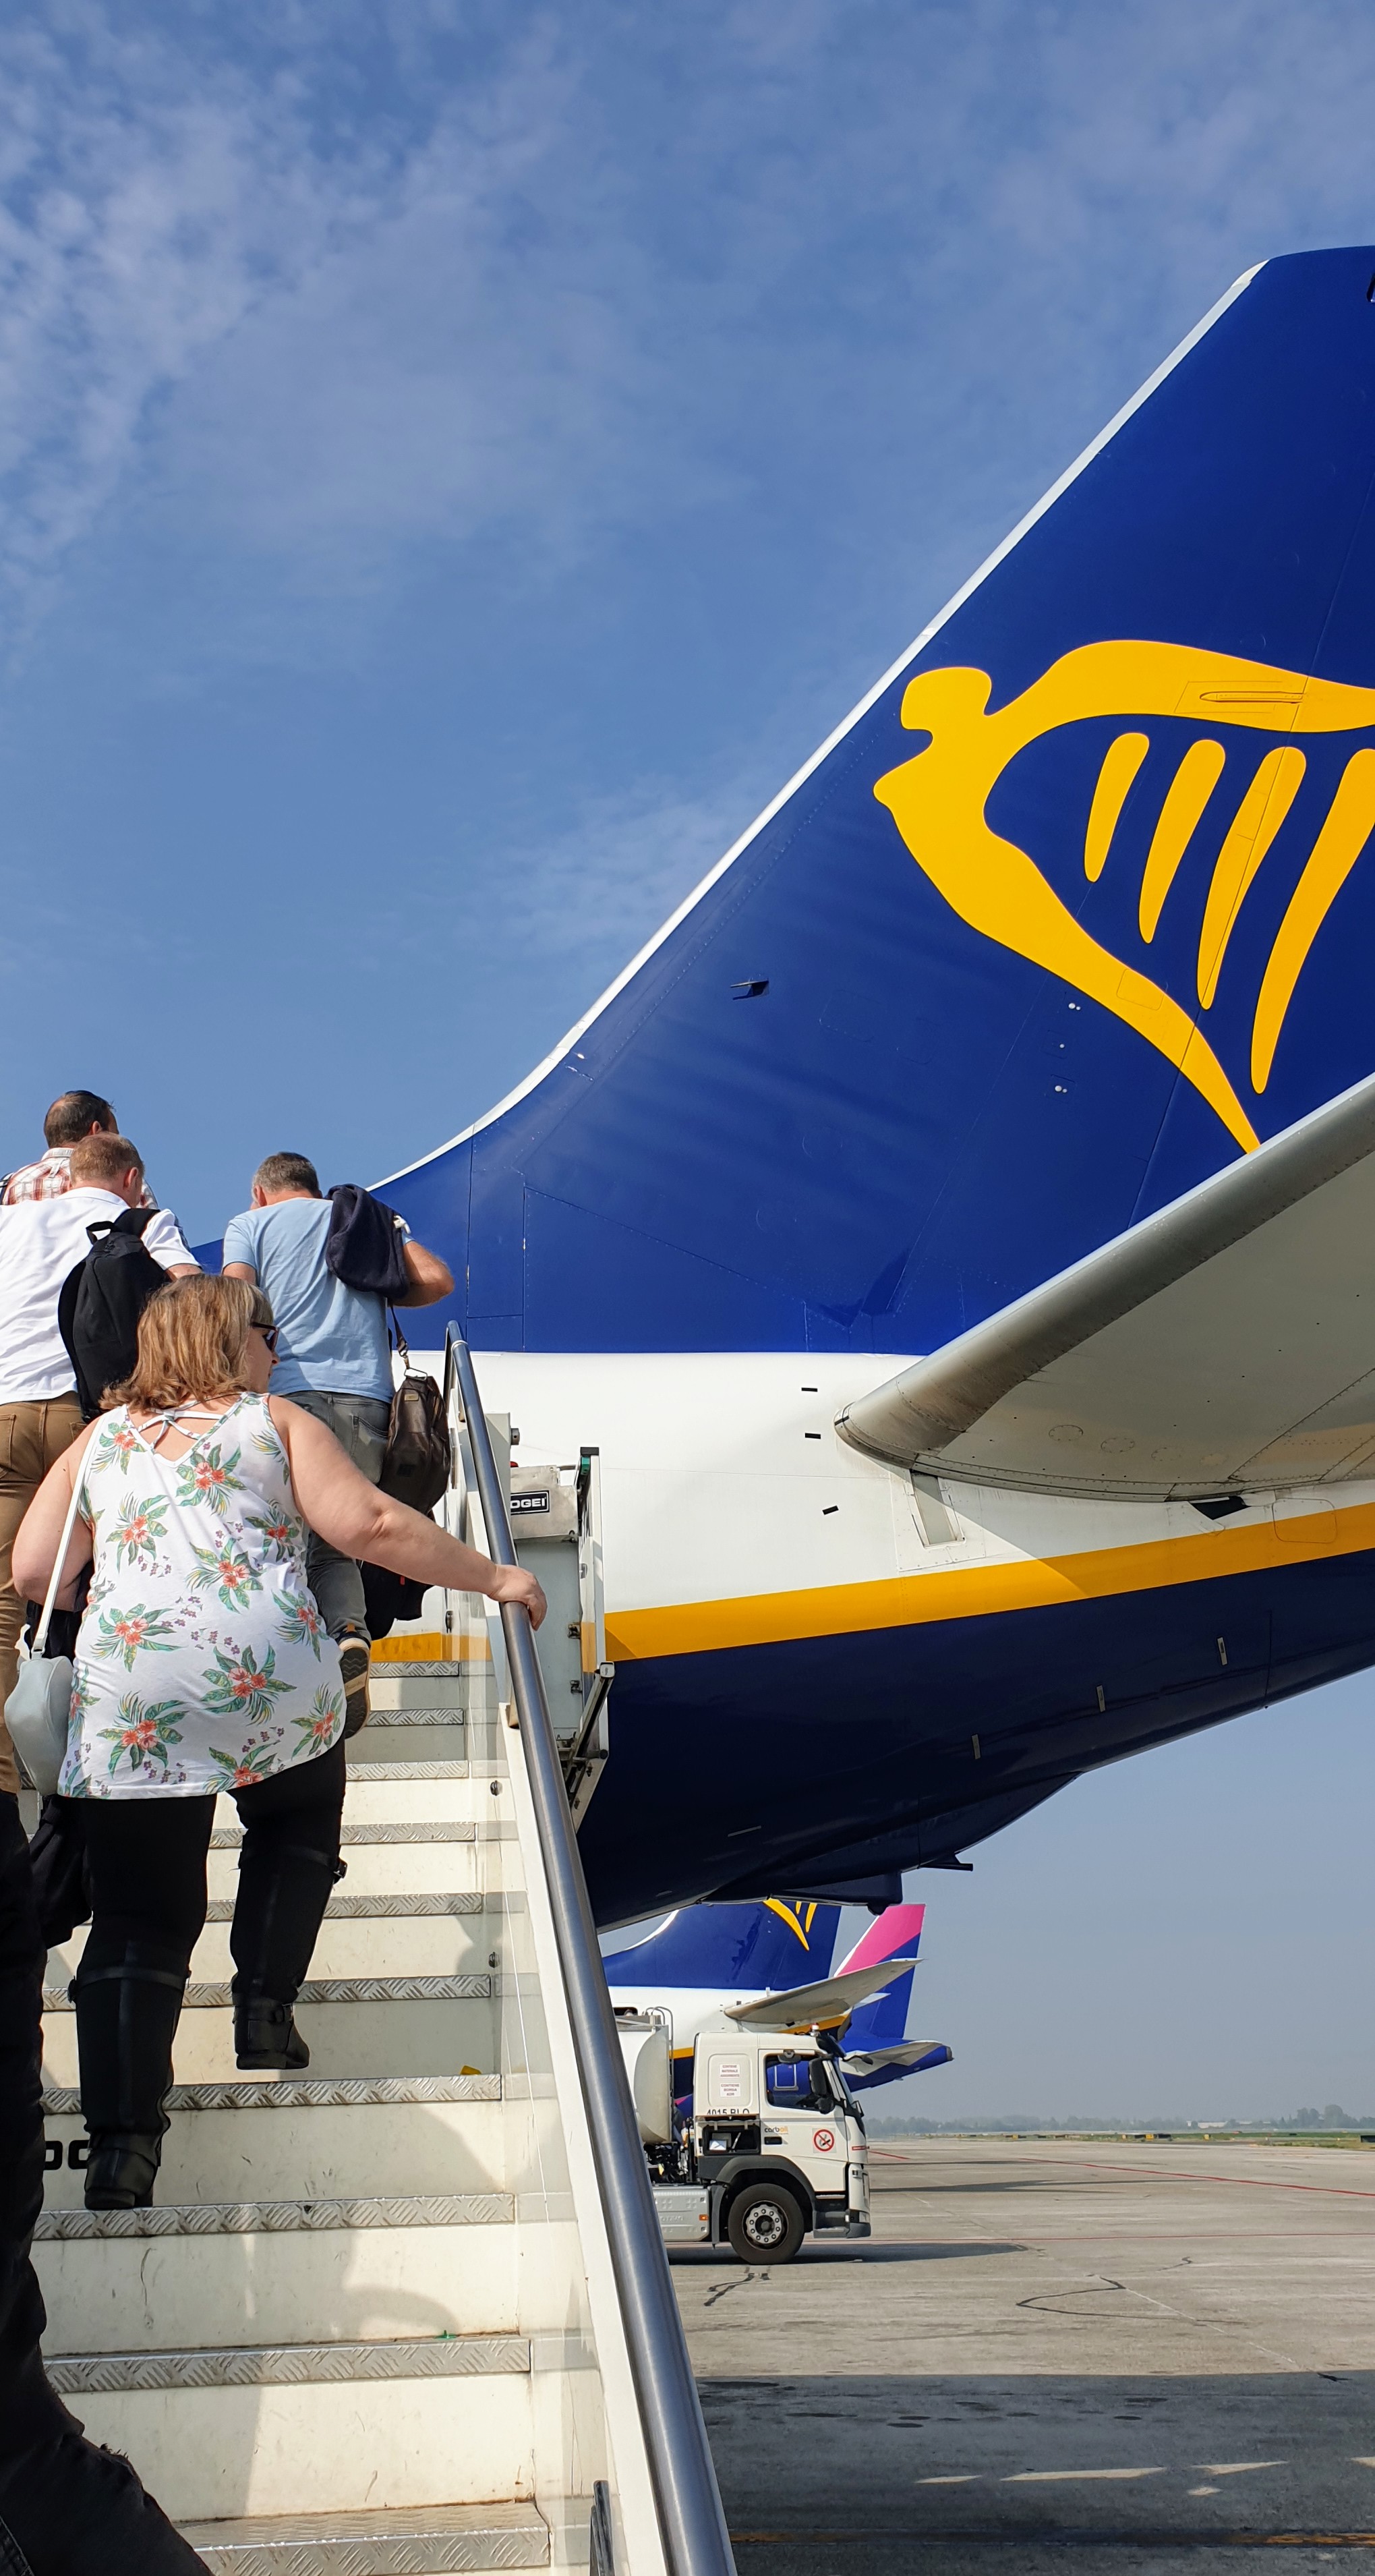 Boarding a Ryanair flight via the back staircase